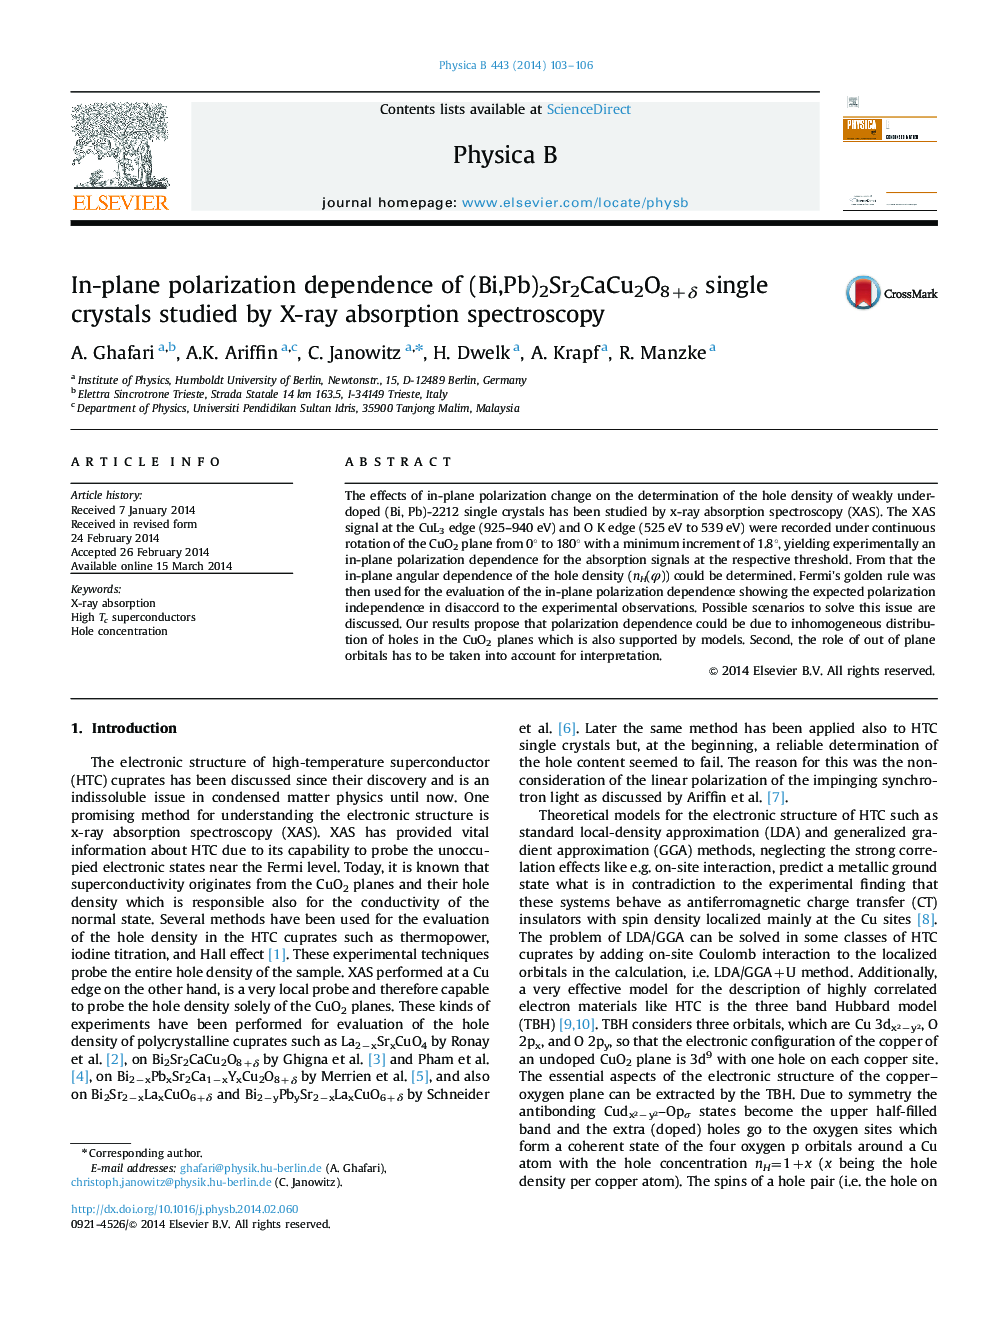 In-plane polarization dependence of (Bi,Pb)2Sr2CaCu2O8+Î´ single crystals studied by X-ray absorption spectroscopy